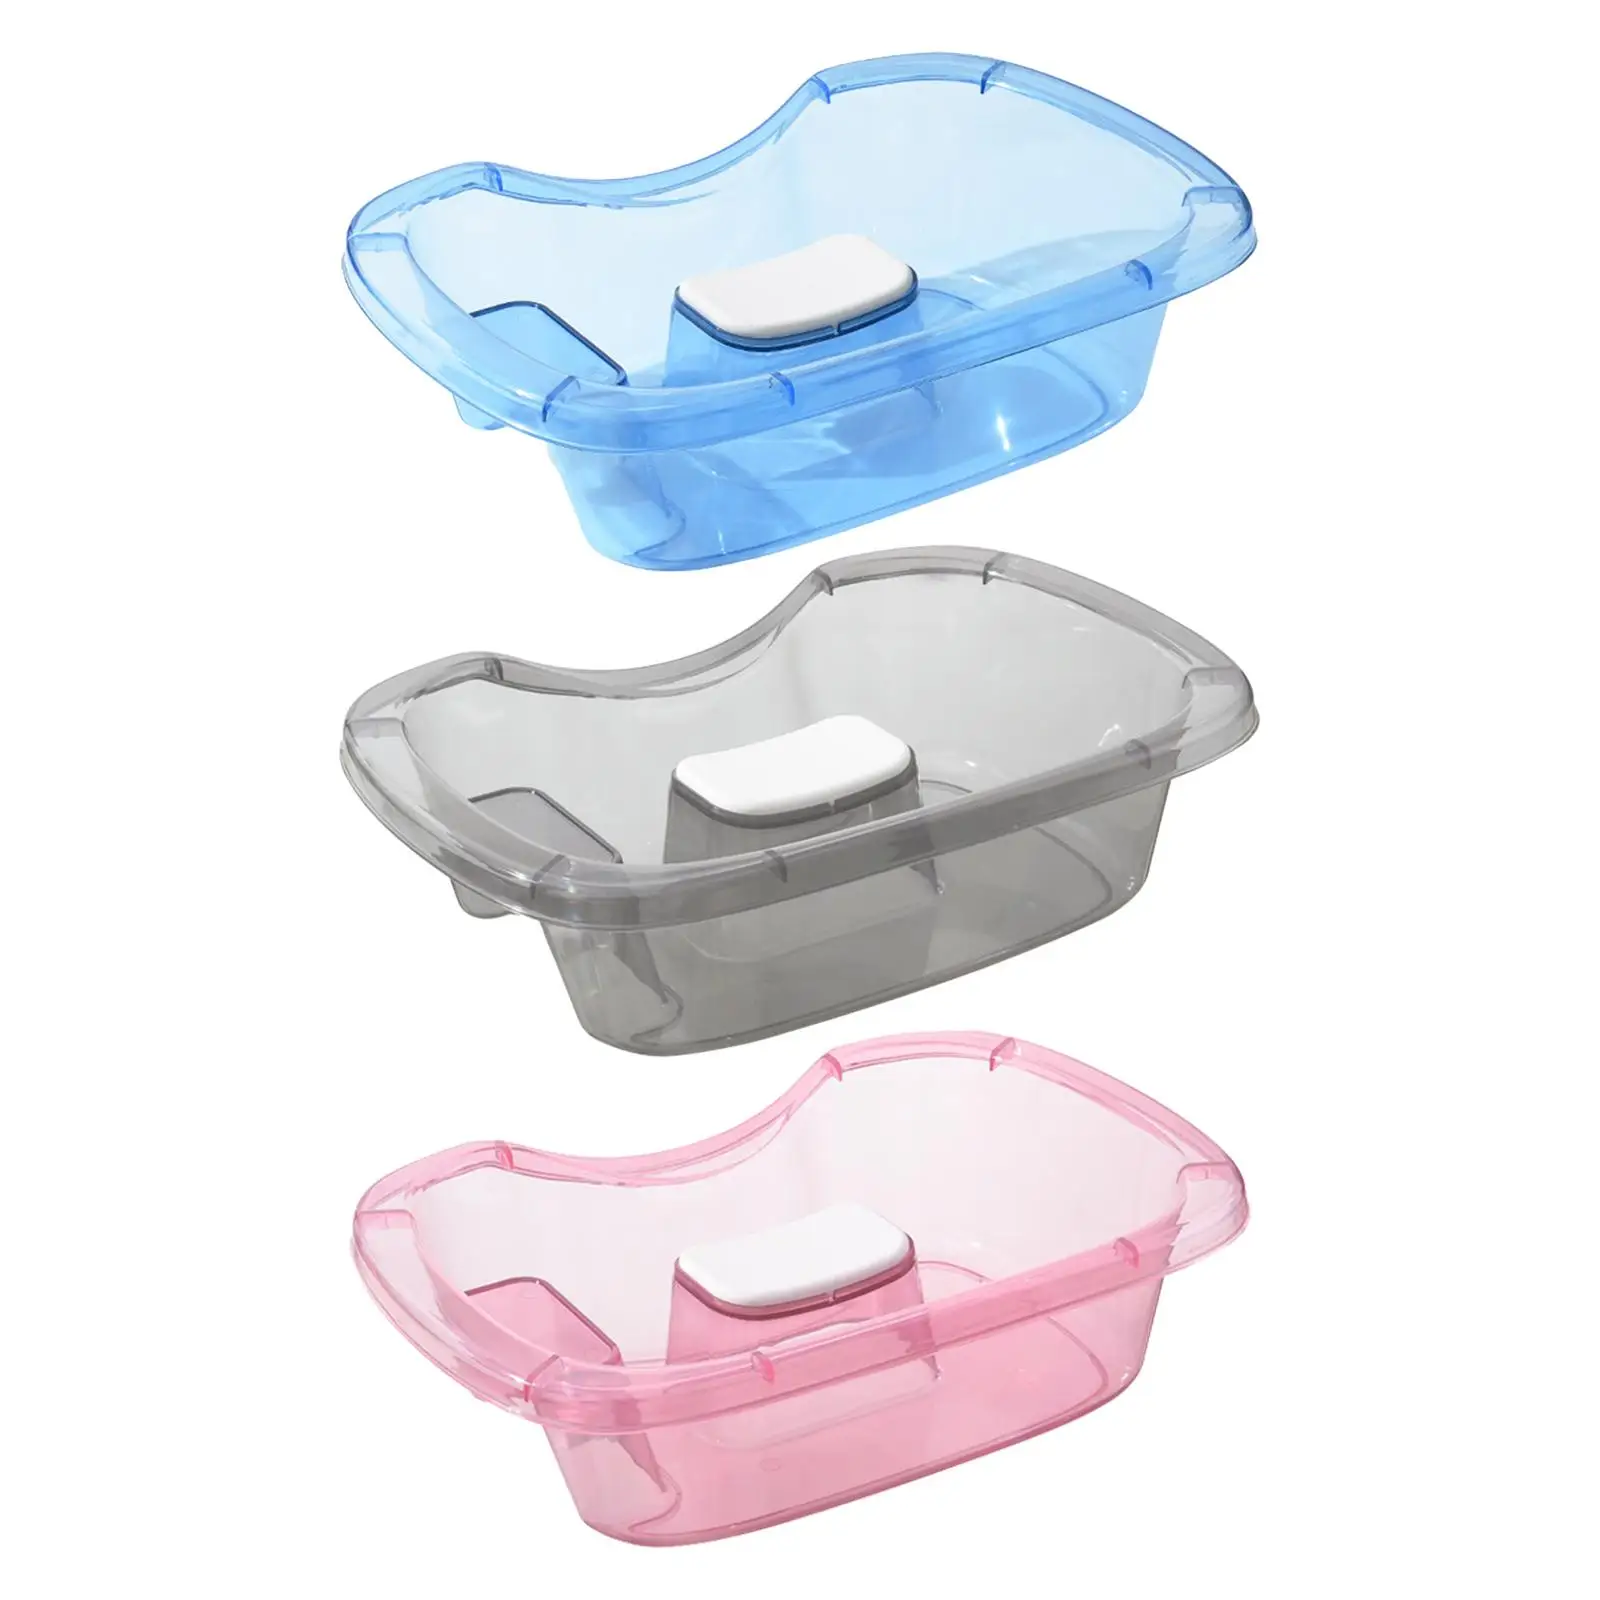 Shampoo Basin Lightweight Rinse Basin Portable Shampoo Bowl Mobile Shampoo Basin for Stylists Home Kids Disabled Bedridden